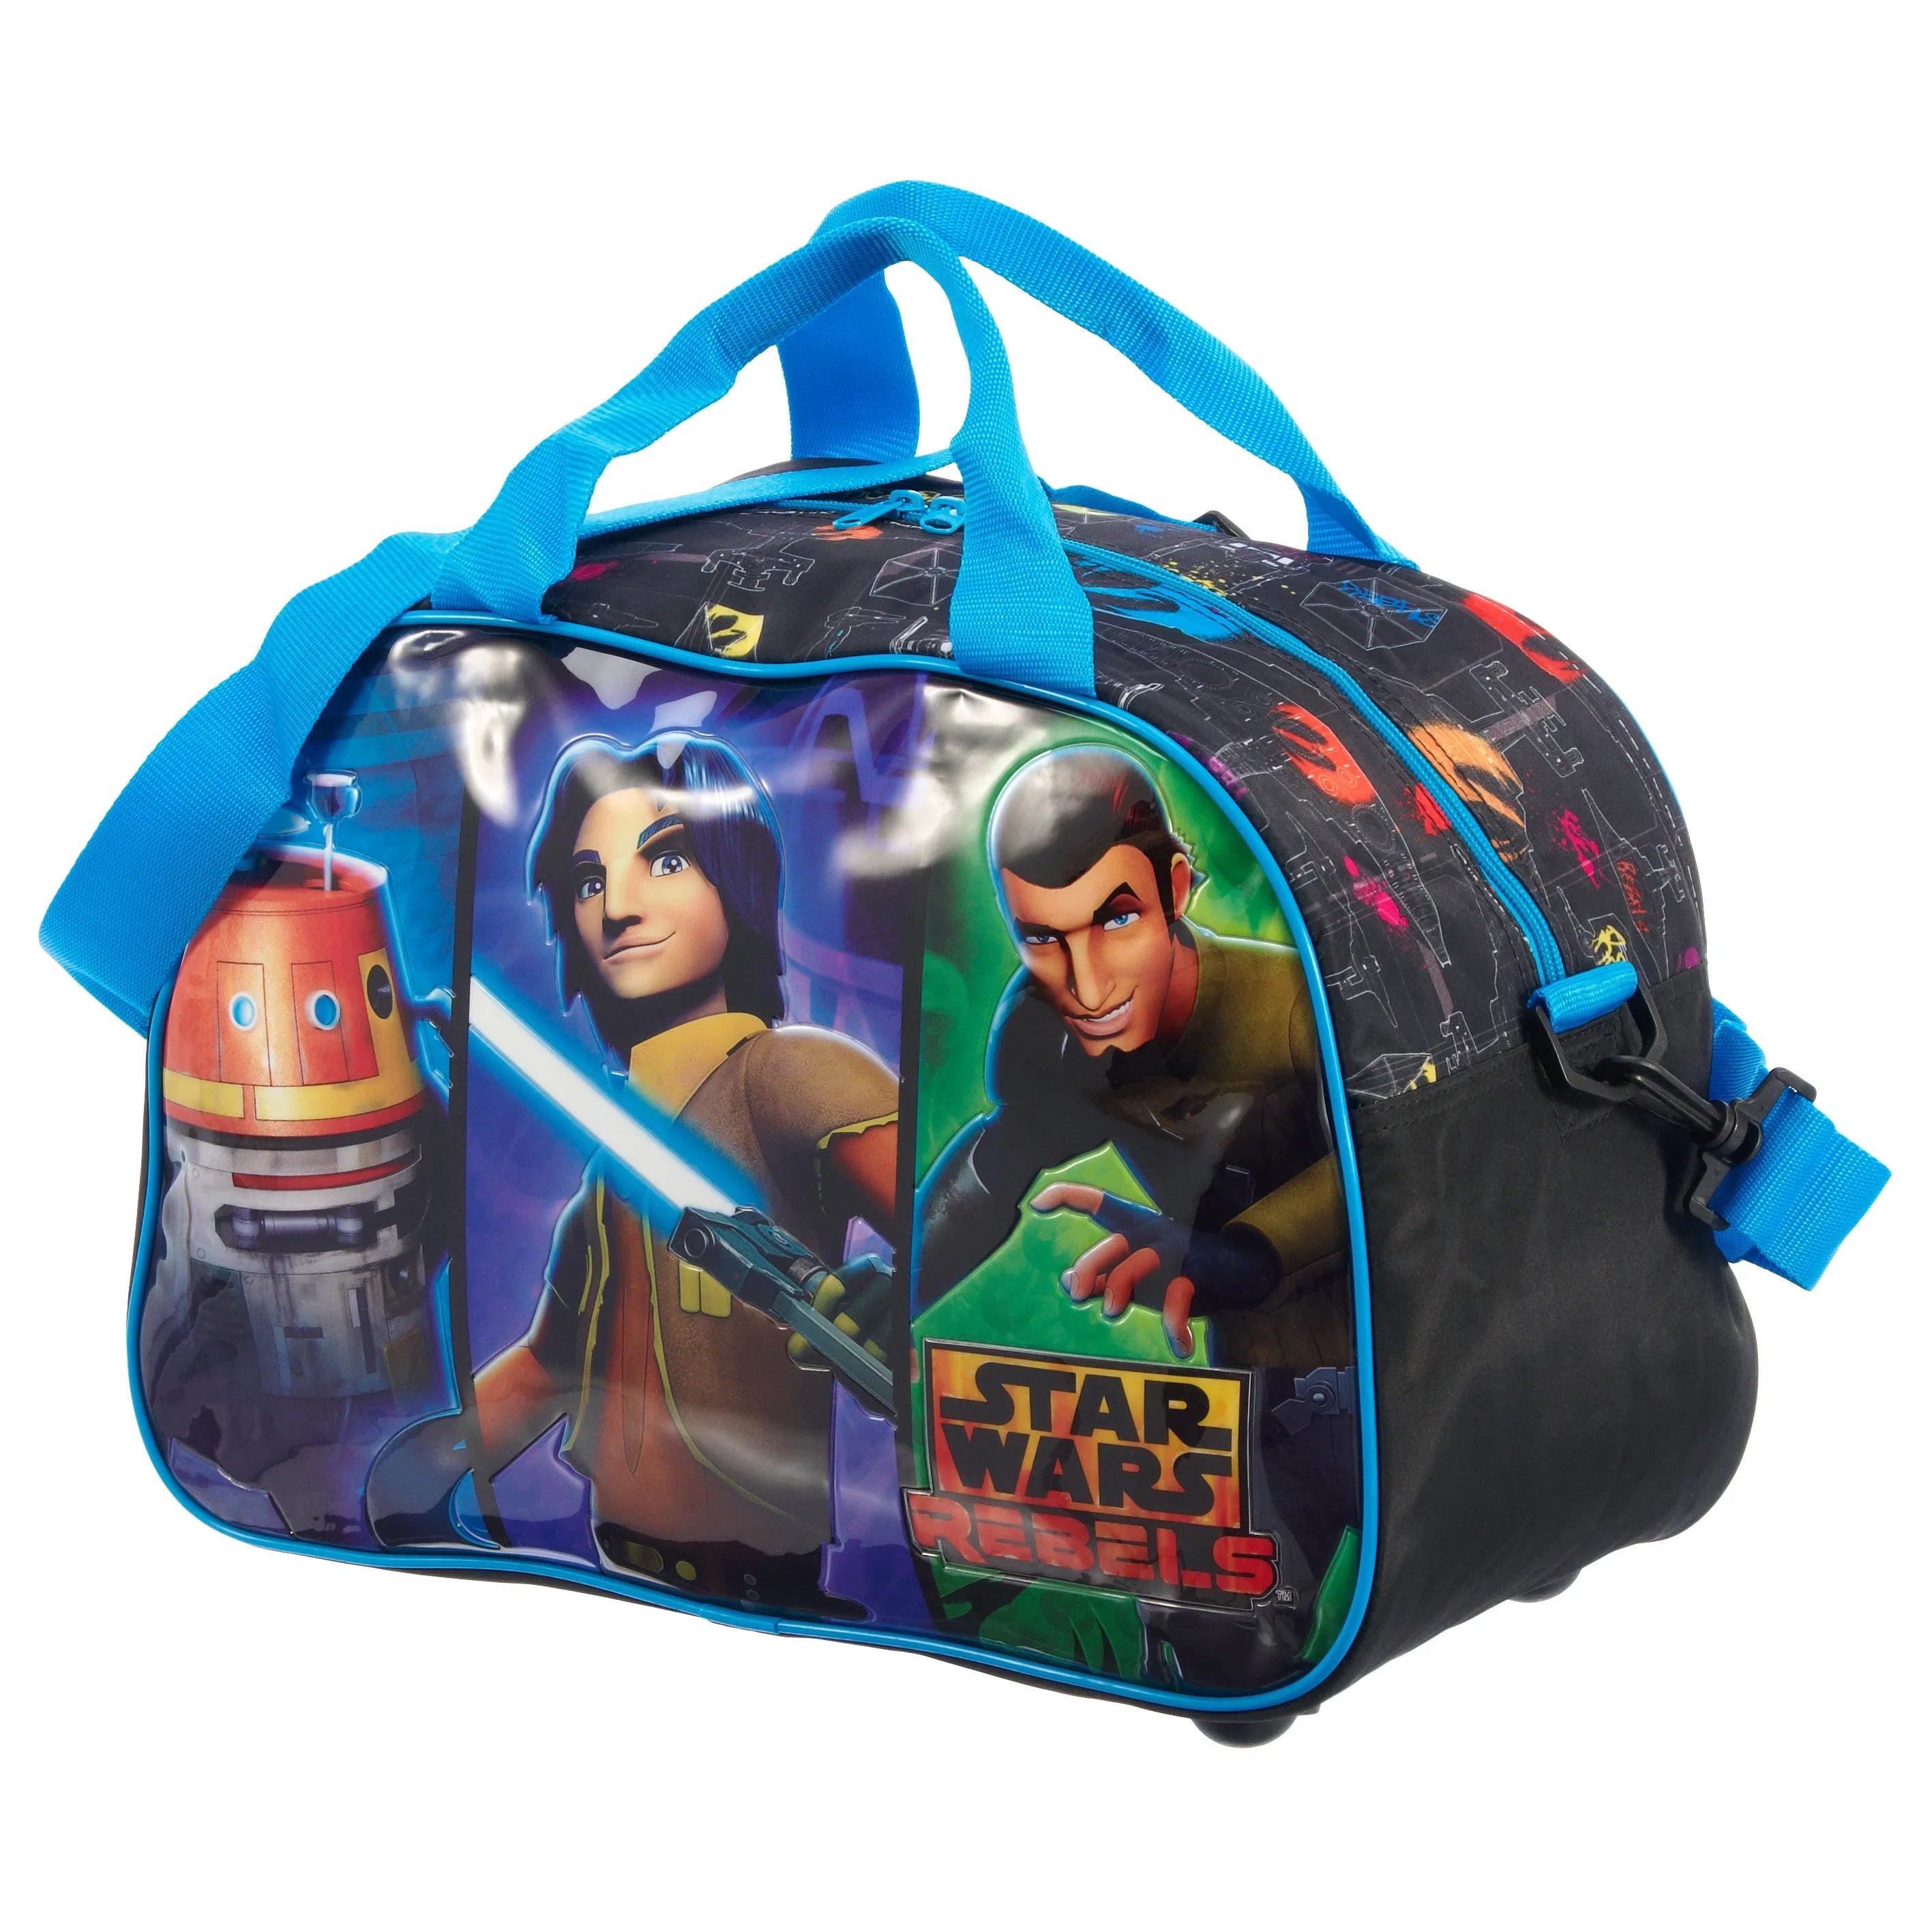 Disney Star Wars Rebels travel bag 40 cm - colorful